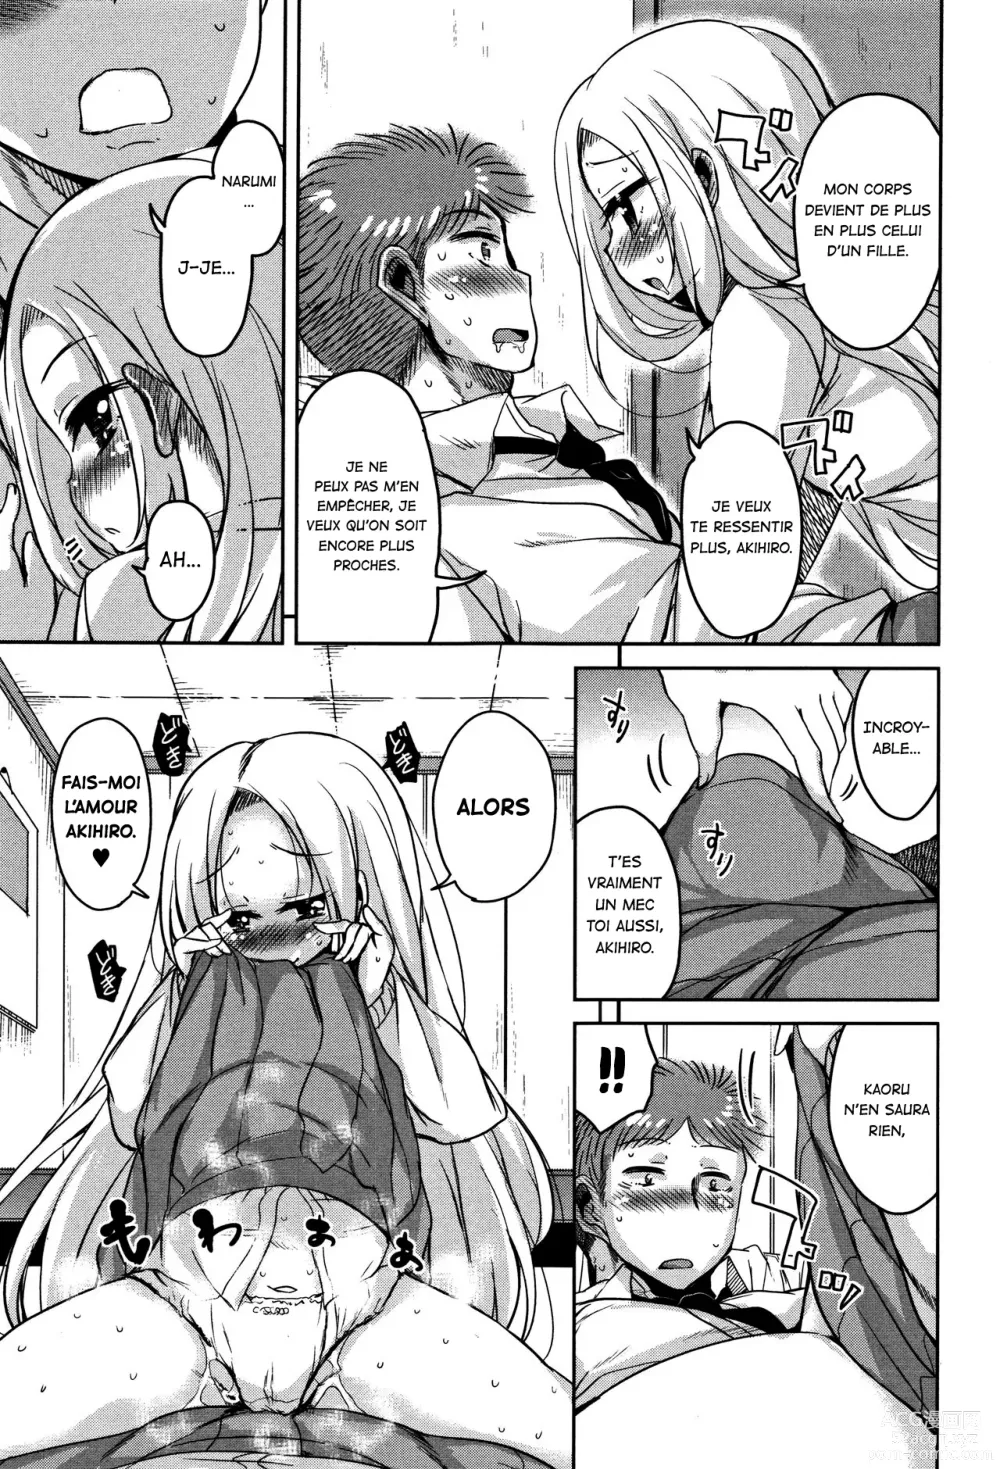 Page 7 of manga La dette TS de Narumi Chapitre d'Akihiro + Chapitre de Narumi + Chapitre de Kaoru